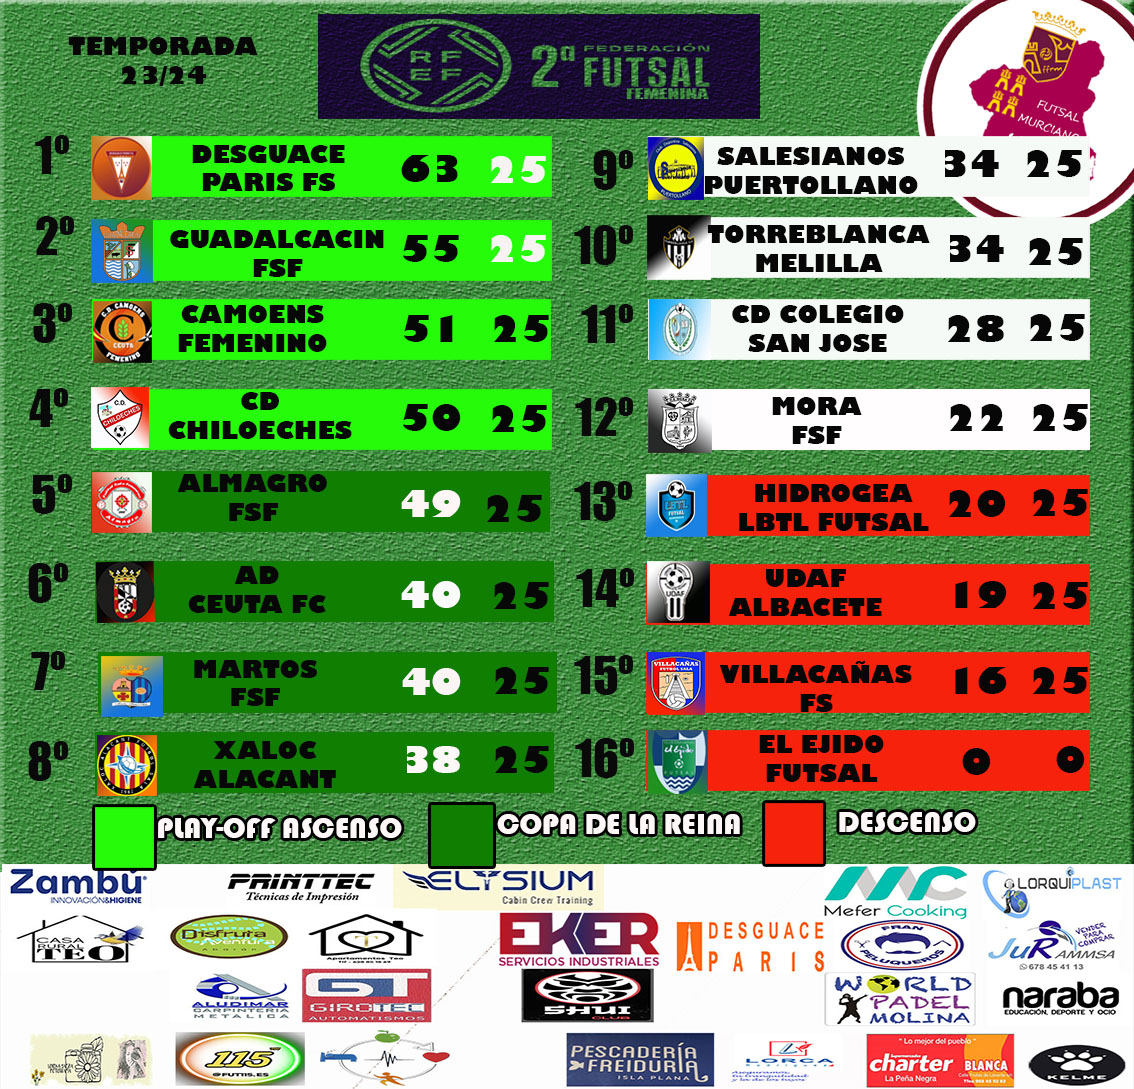 #lacasadelfutsalmurciano
Resultados y clasificación
jornada 25
2ª rfef futsal femenina grupo 3
#futsalmur #l3futsal #SomosFutsal #somosffrm #fotografiadeportiva #disfrutalaliga